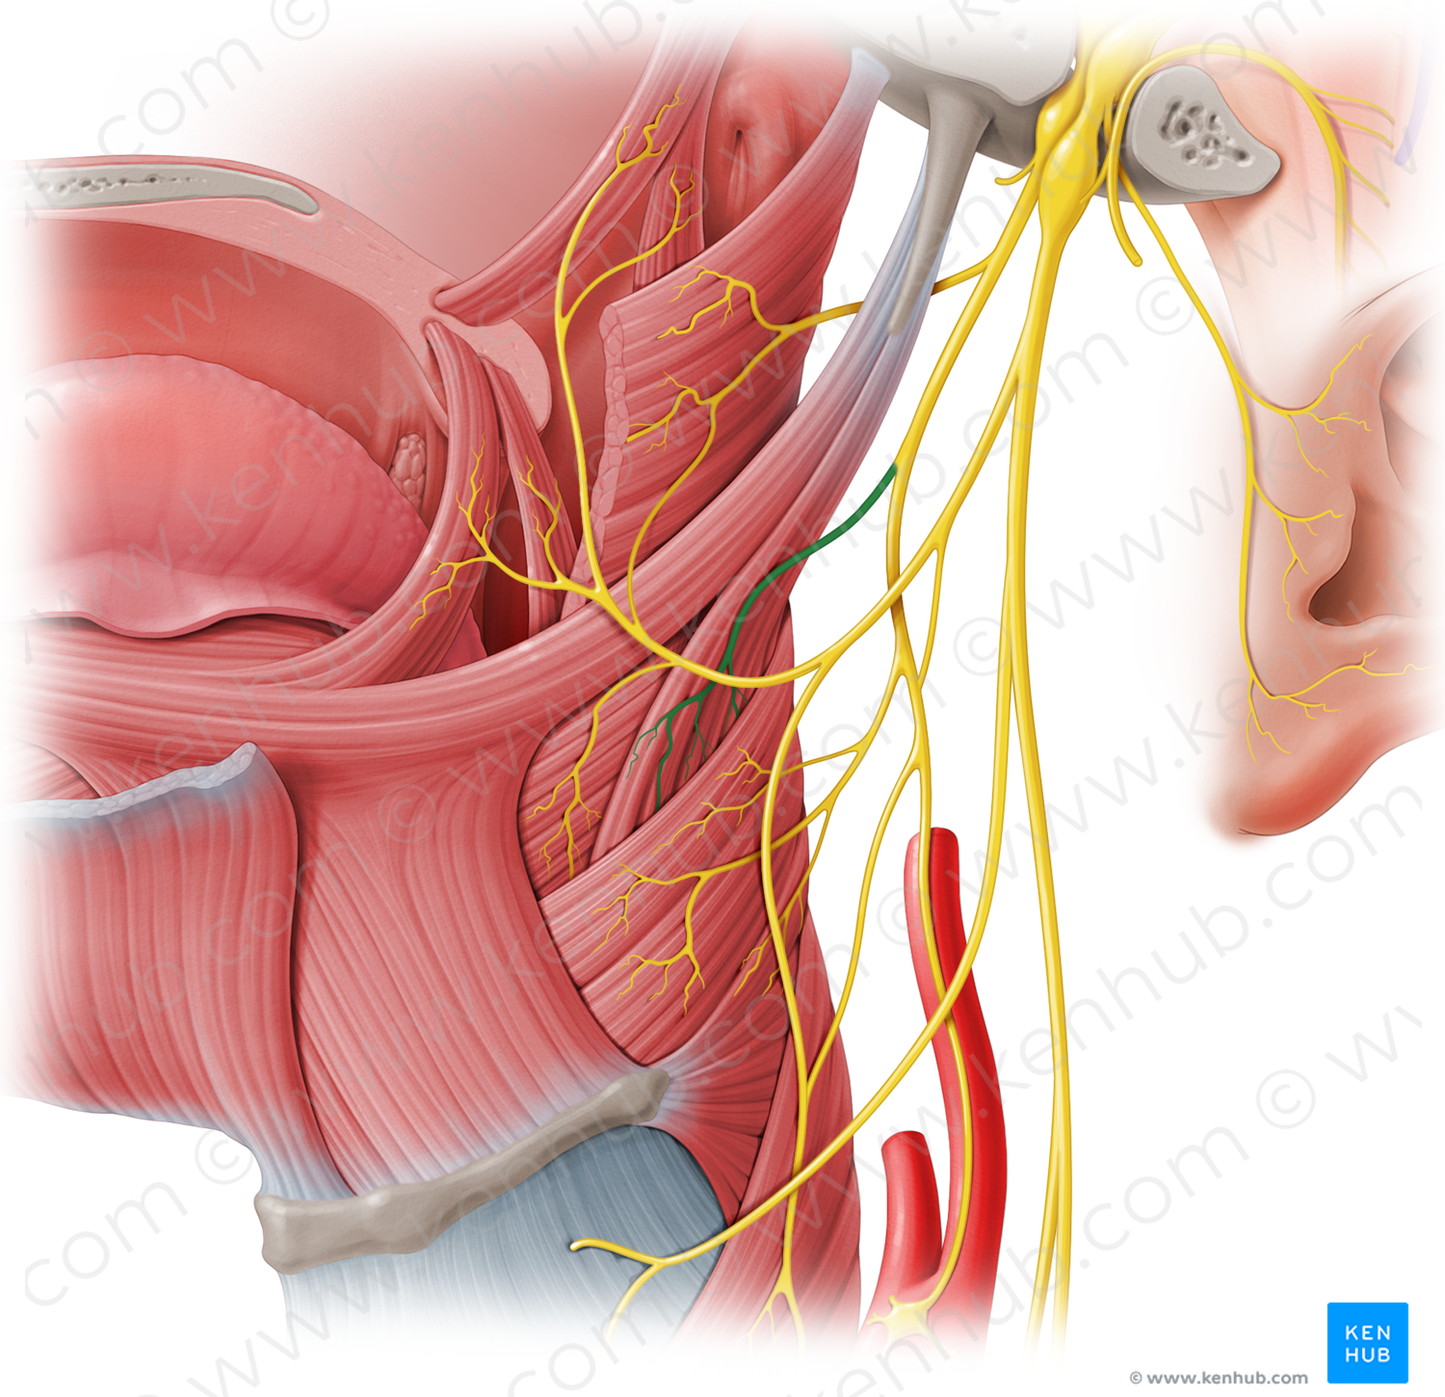 Stylopharyngeal branch of glossopharyngeal nerve (#8535)